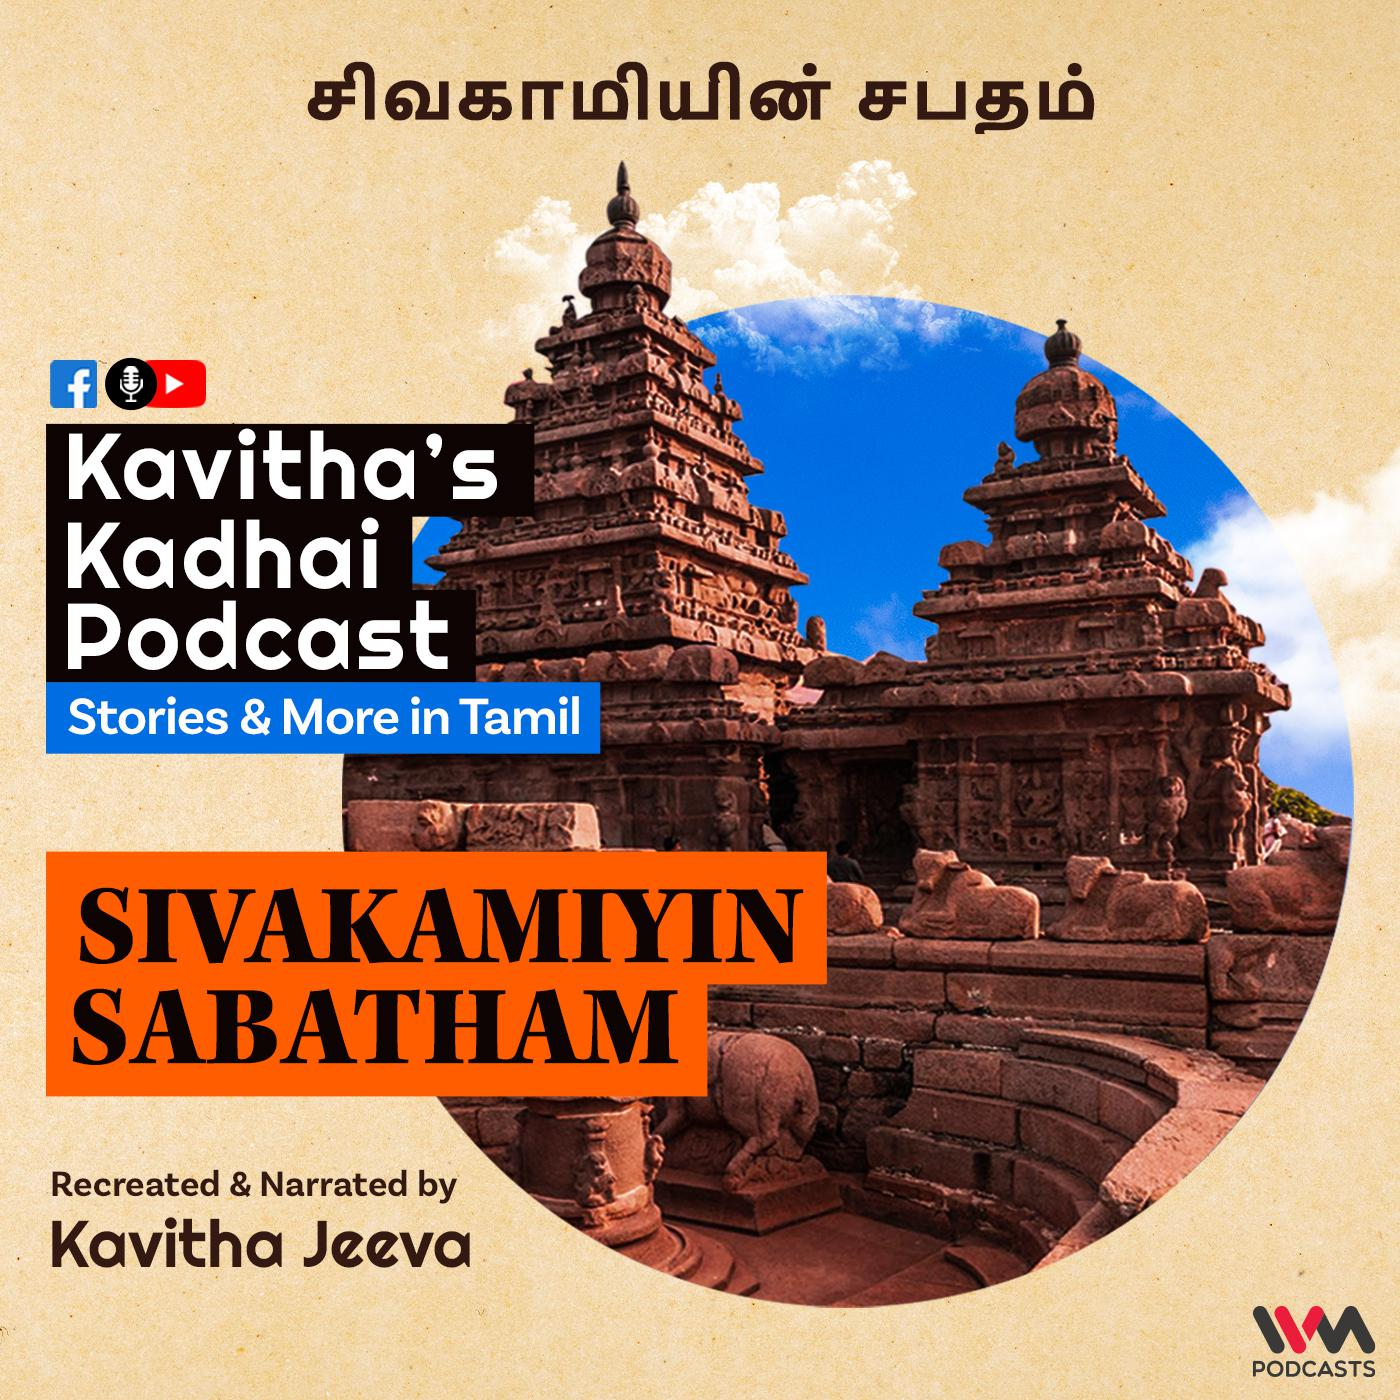 KadhaiPodcast's Sivakamiyin Sabatham with Kavitha Jeeva - Episode #120